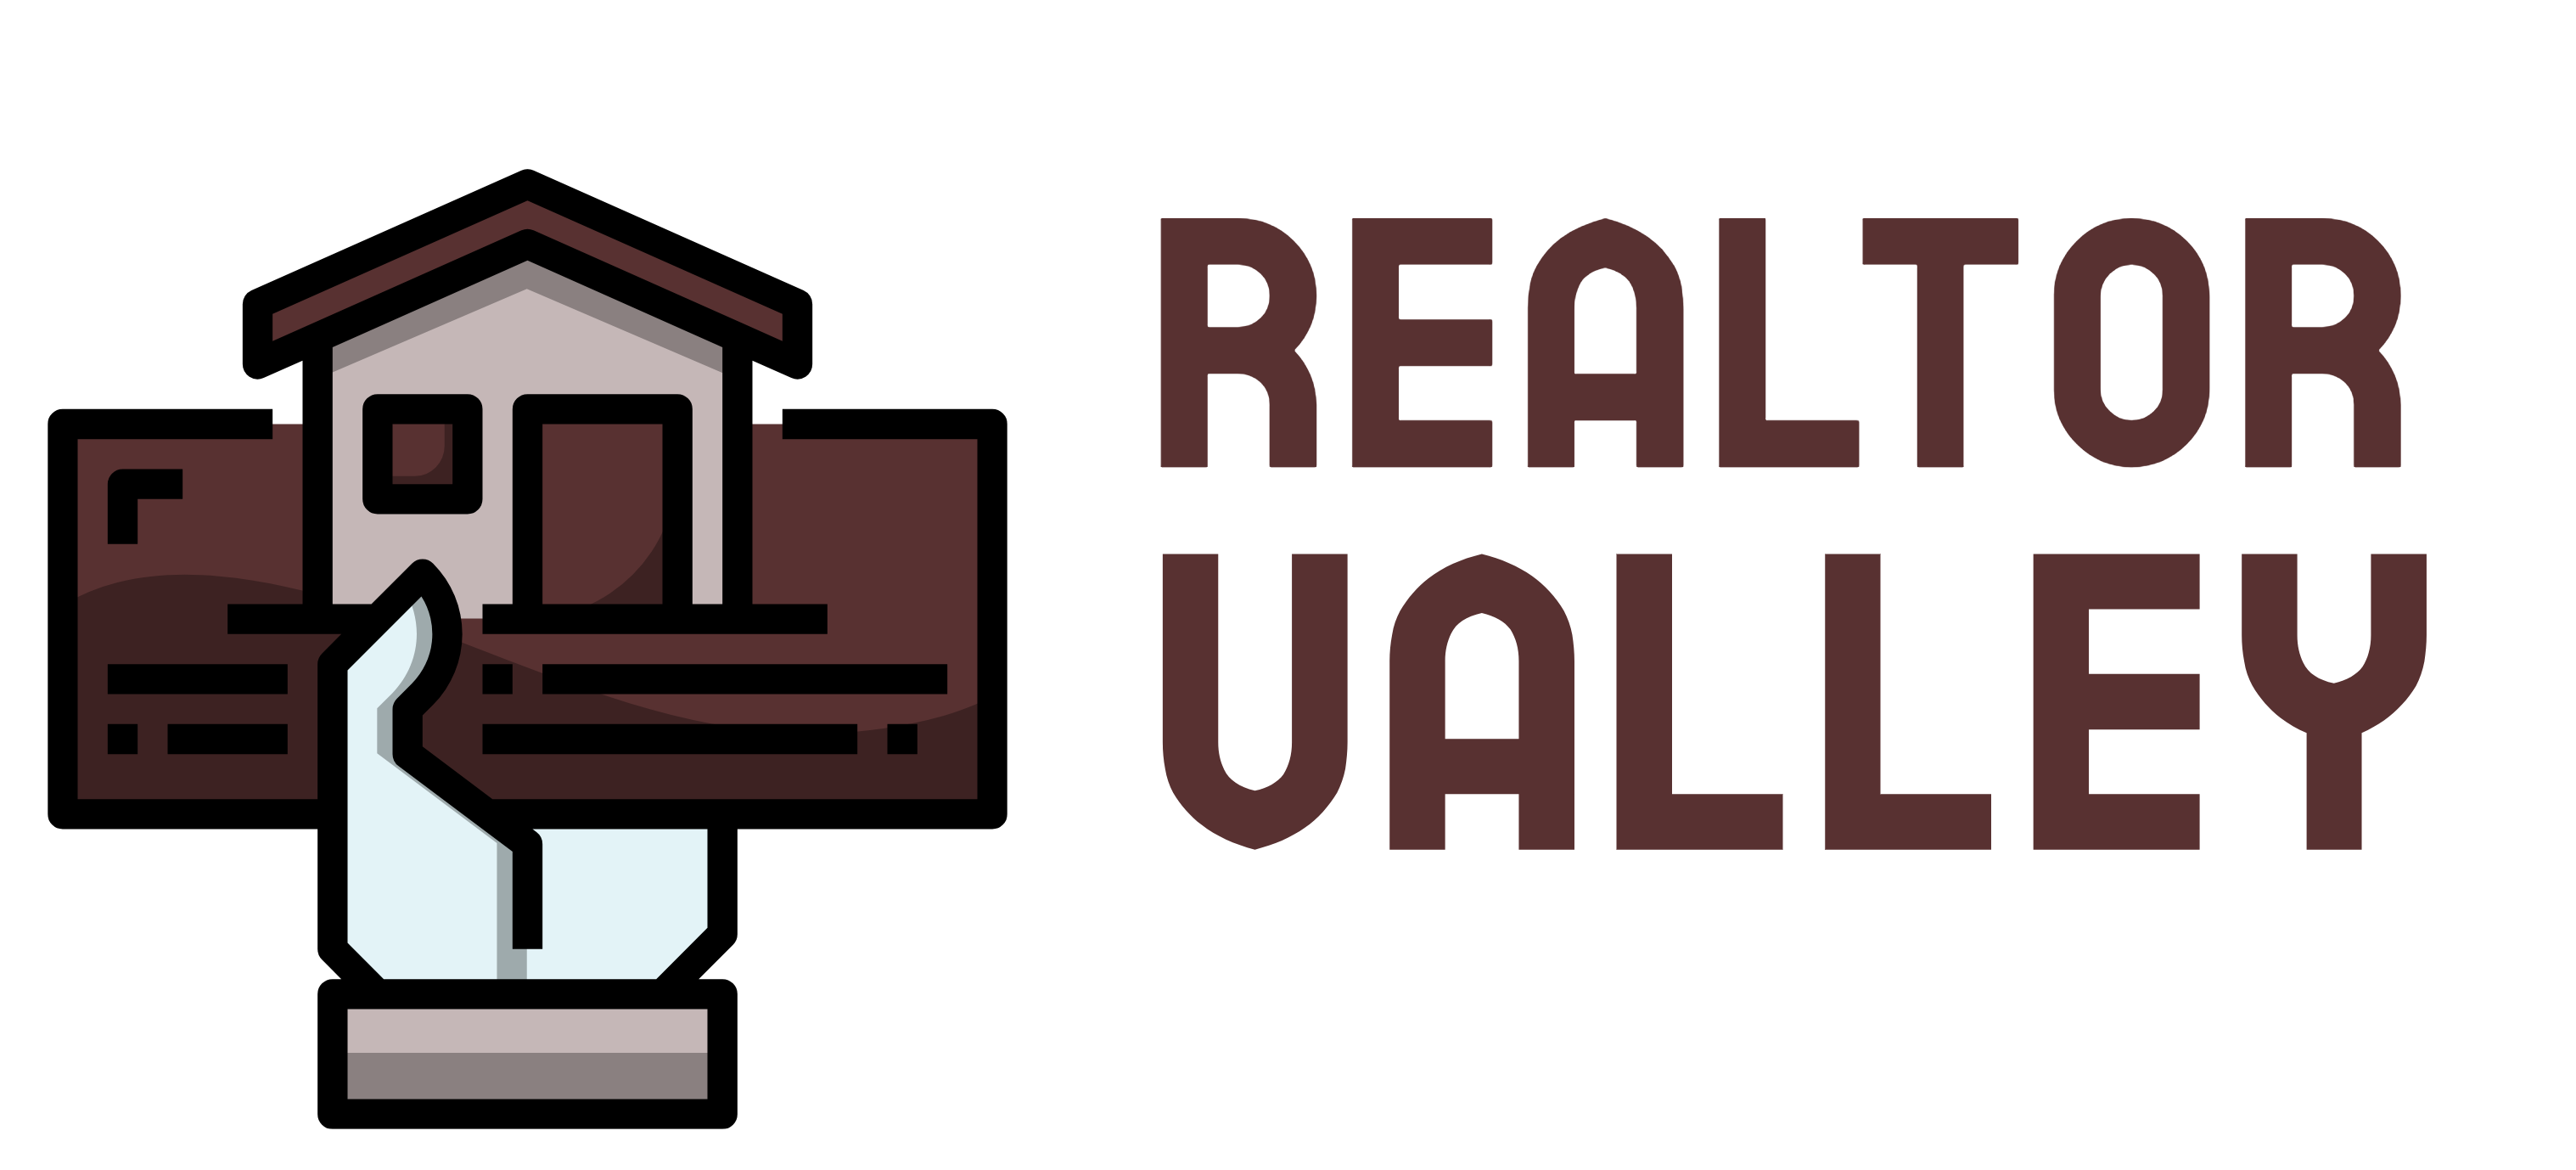 RealtorValley-logo